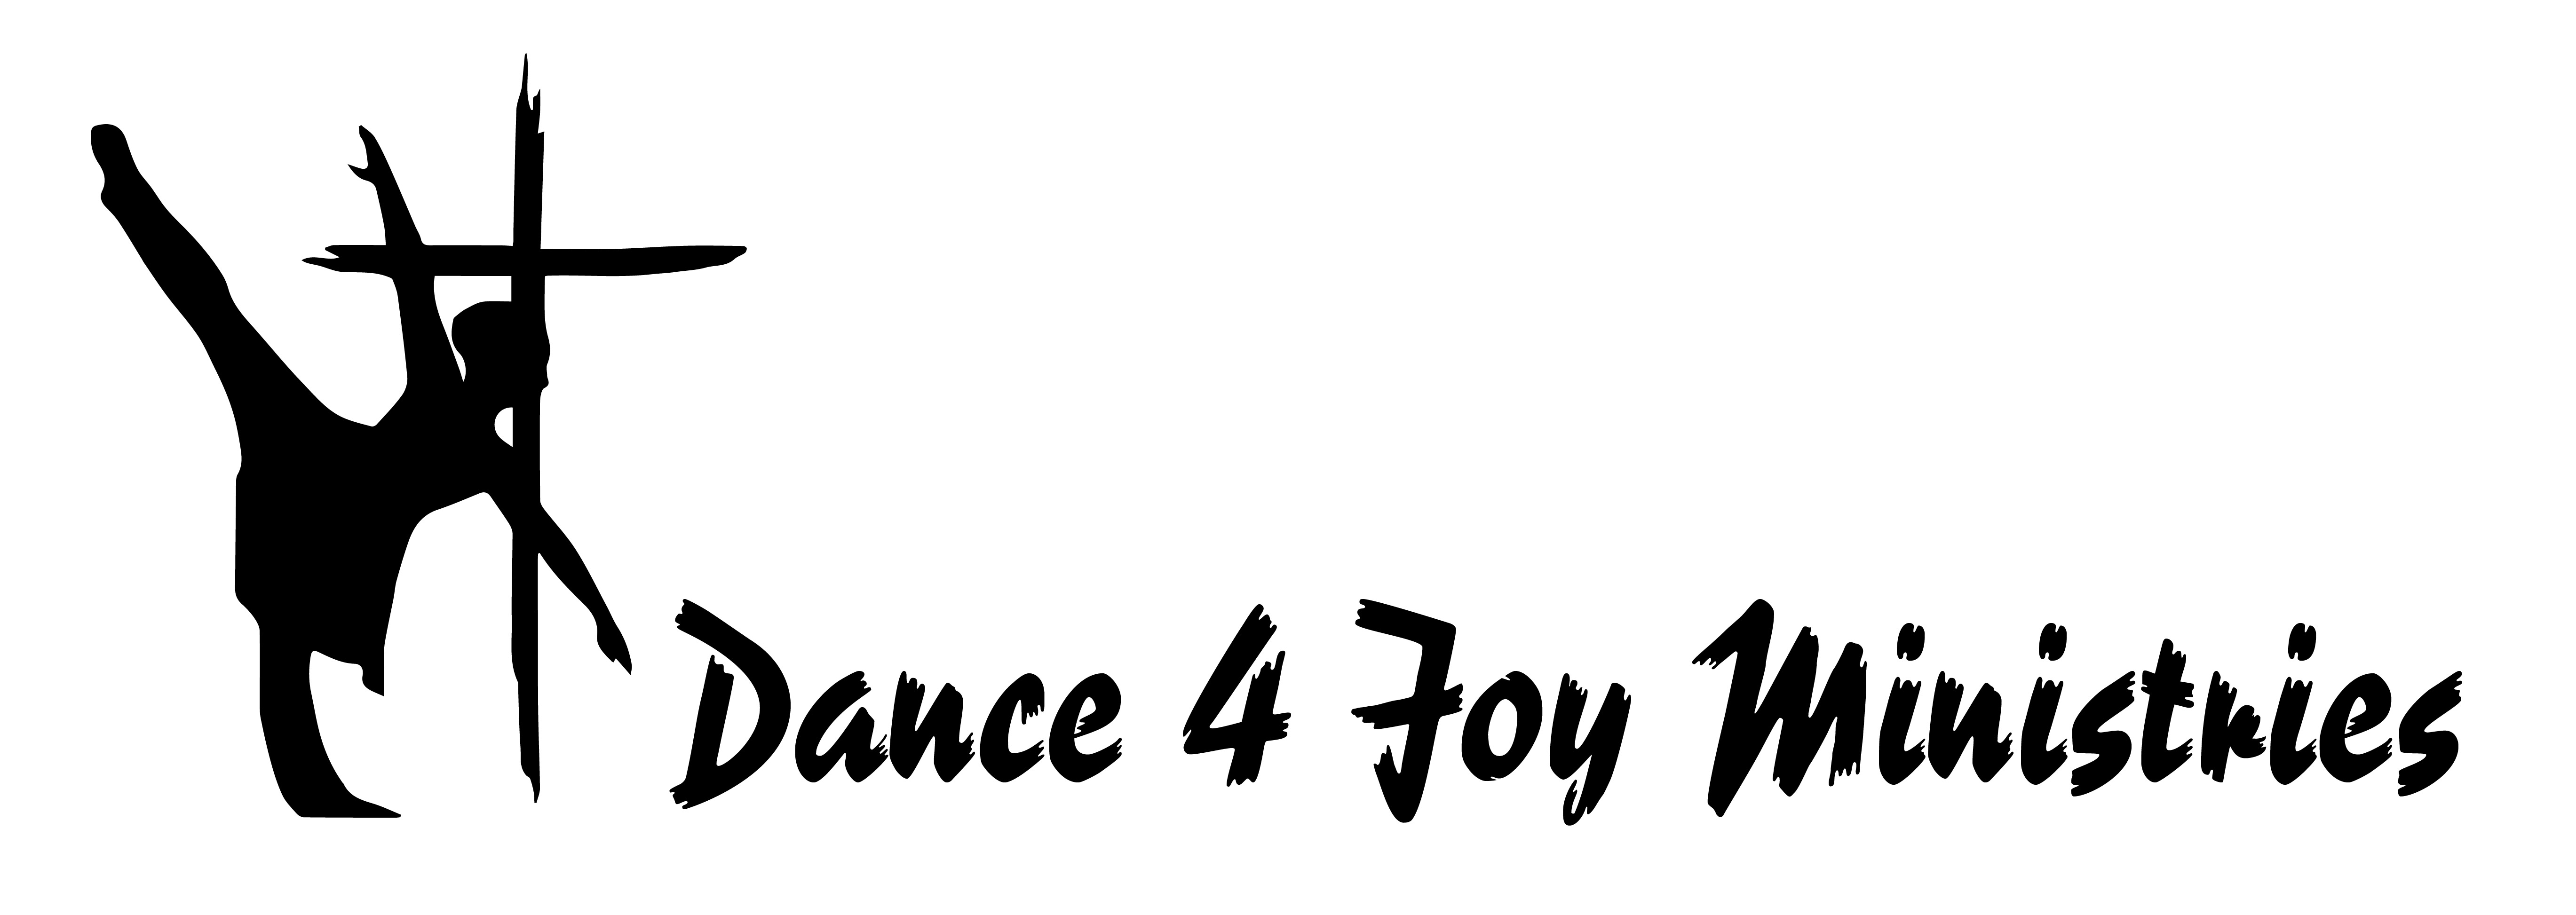 Dance 4 Joy Ministries logo